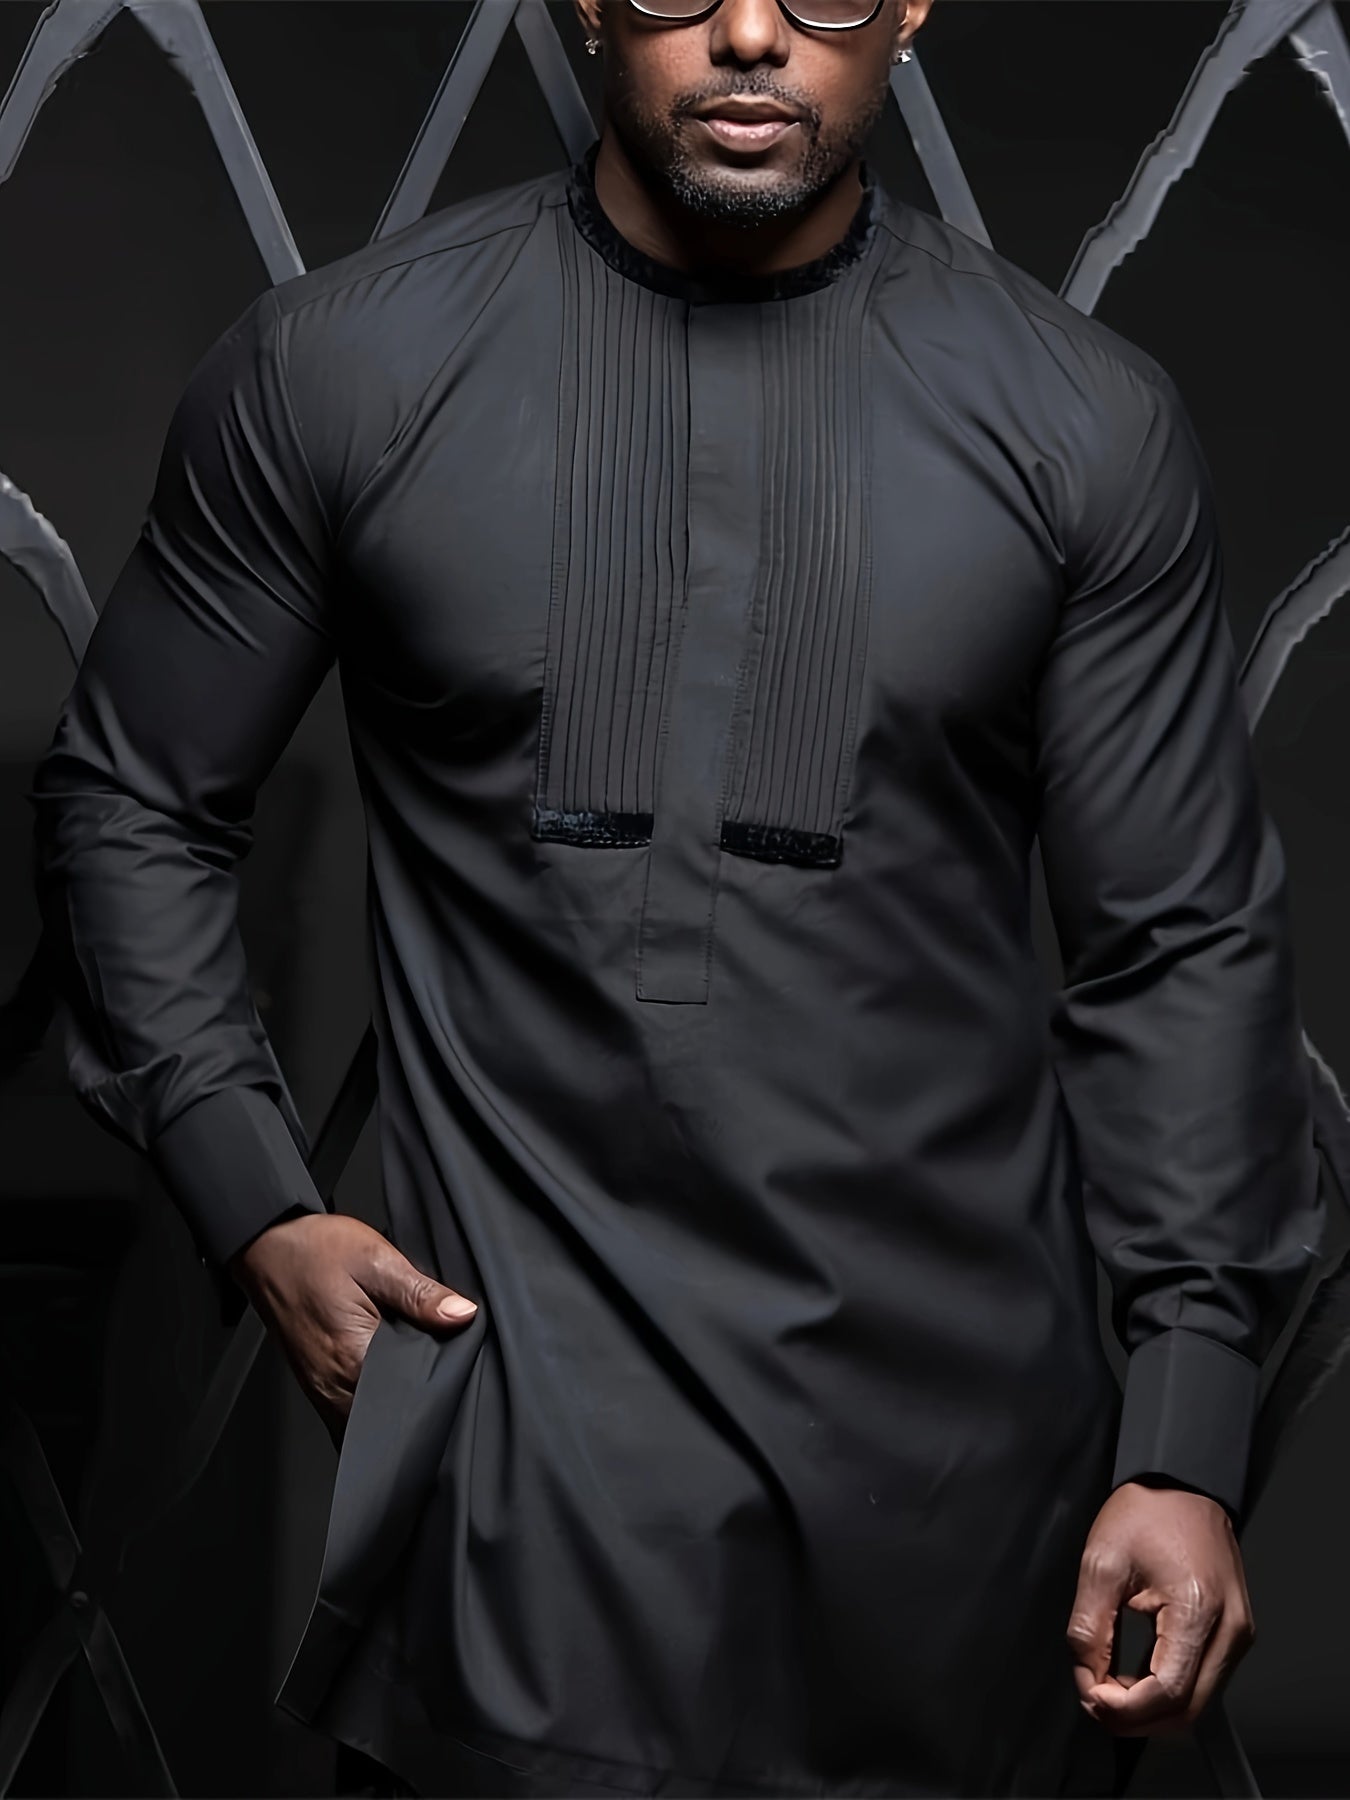 African men's black kaftan outfit set.